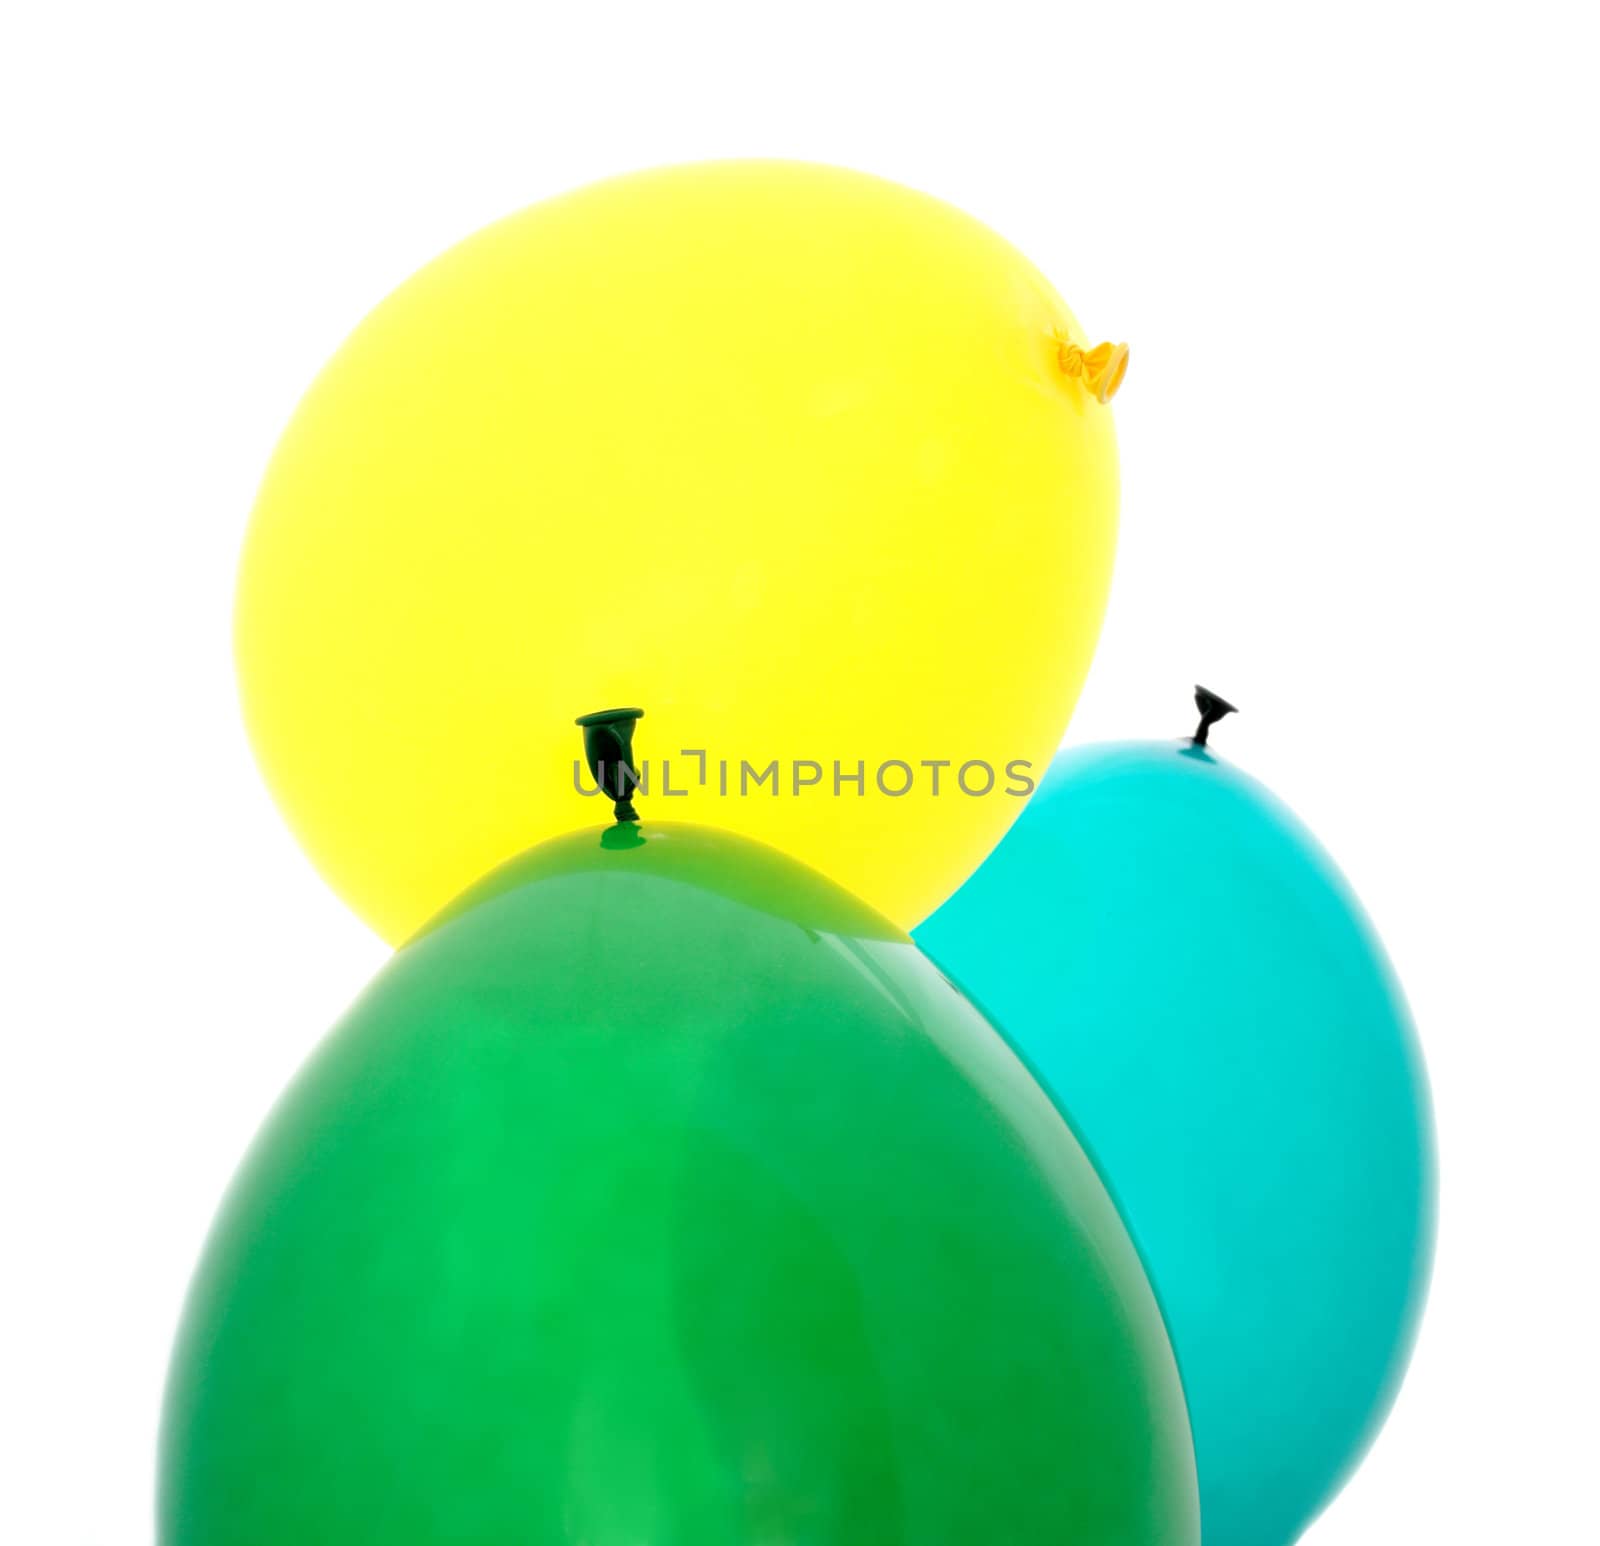 yellow, green and blue balloons by nebari